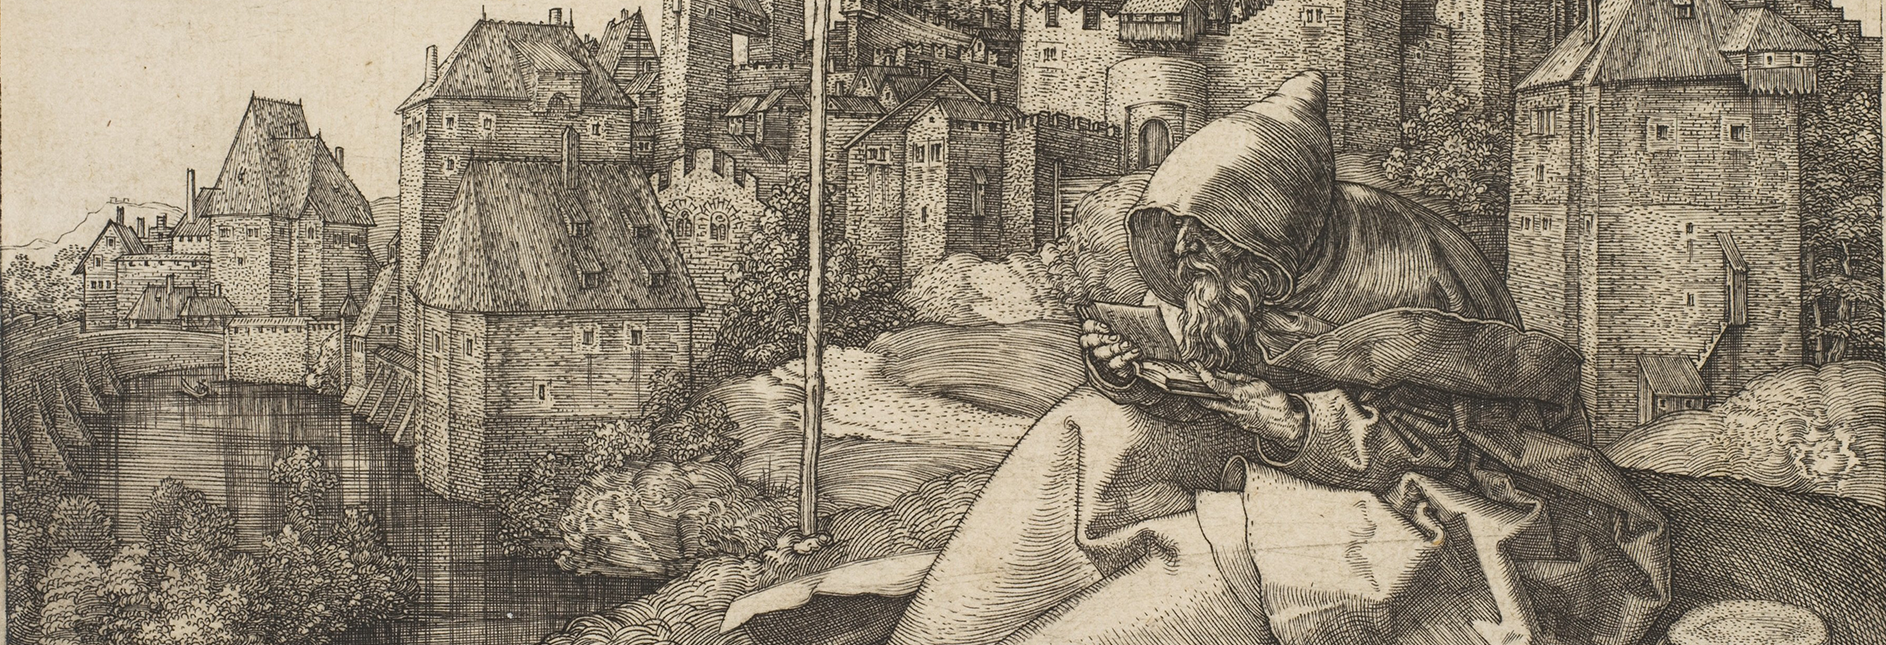 Albrecht Durer print of St. Anthony